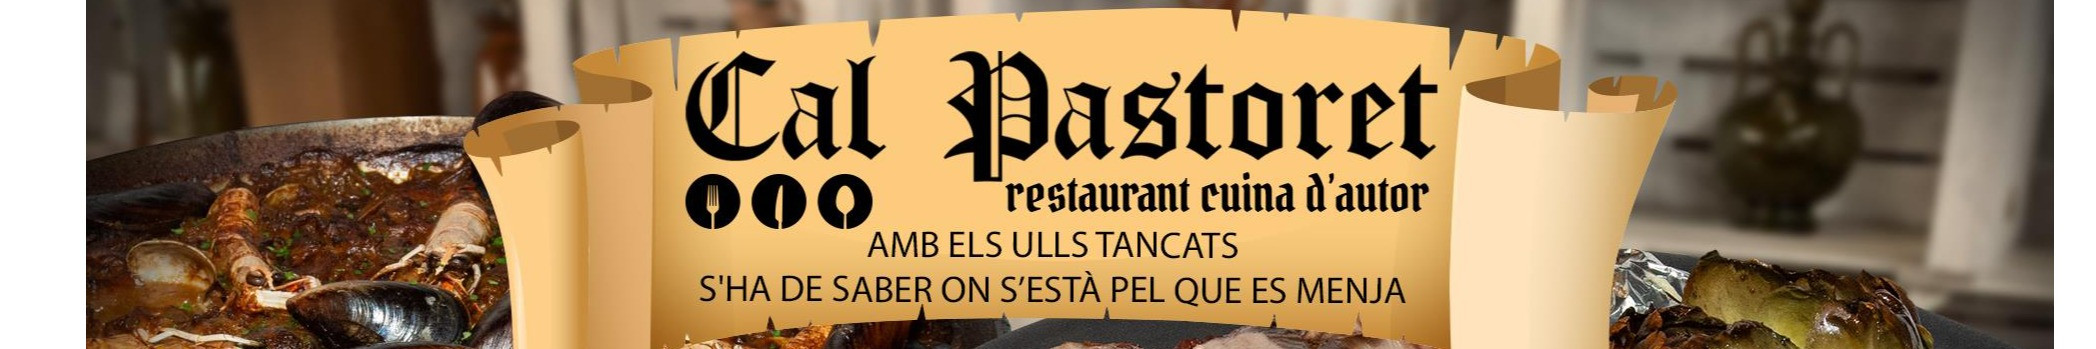 Restaurant Cal Pastoret